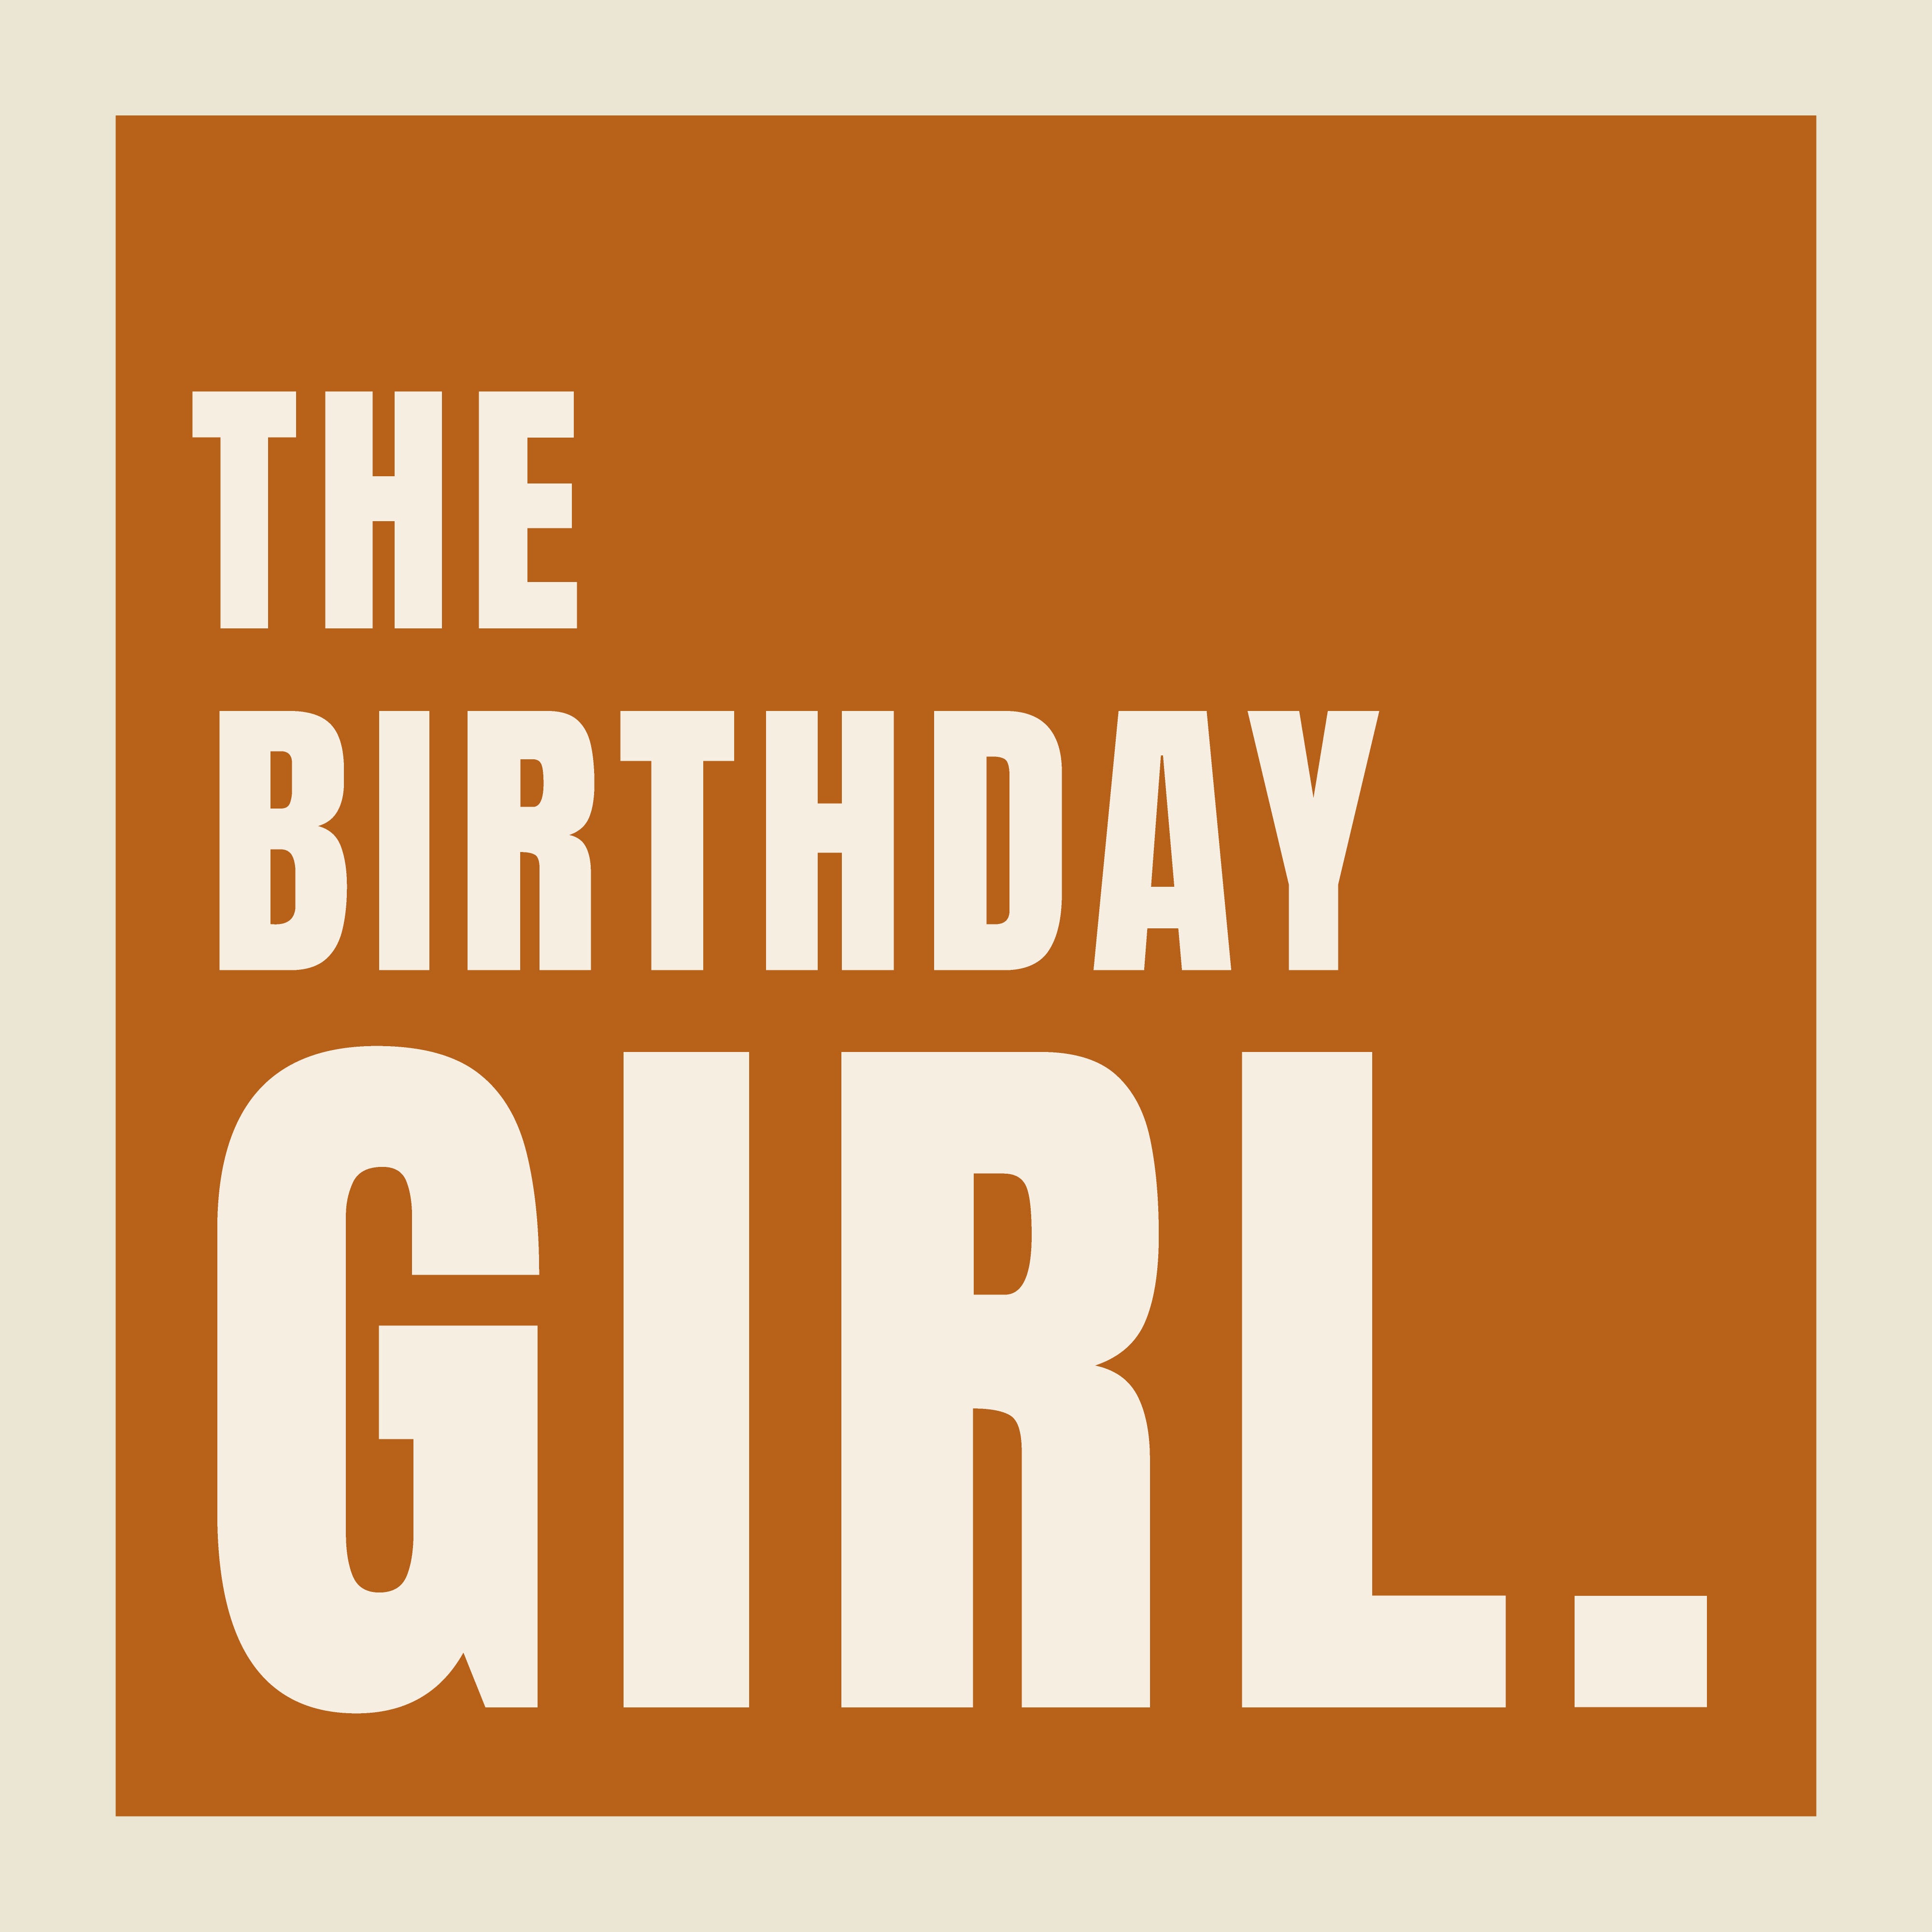 'THE BIRTHDAY GIRL' GIFT BOX